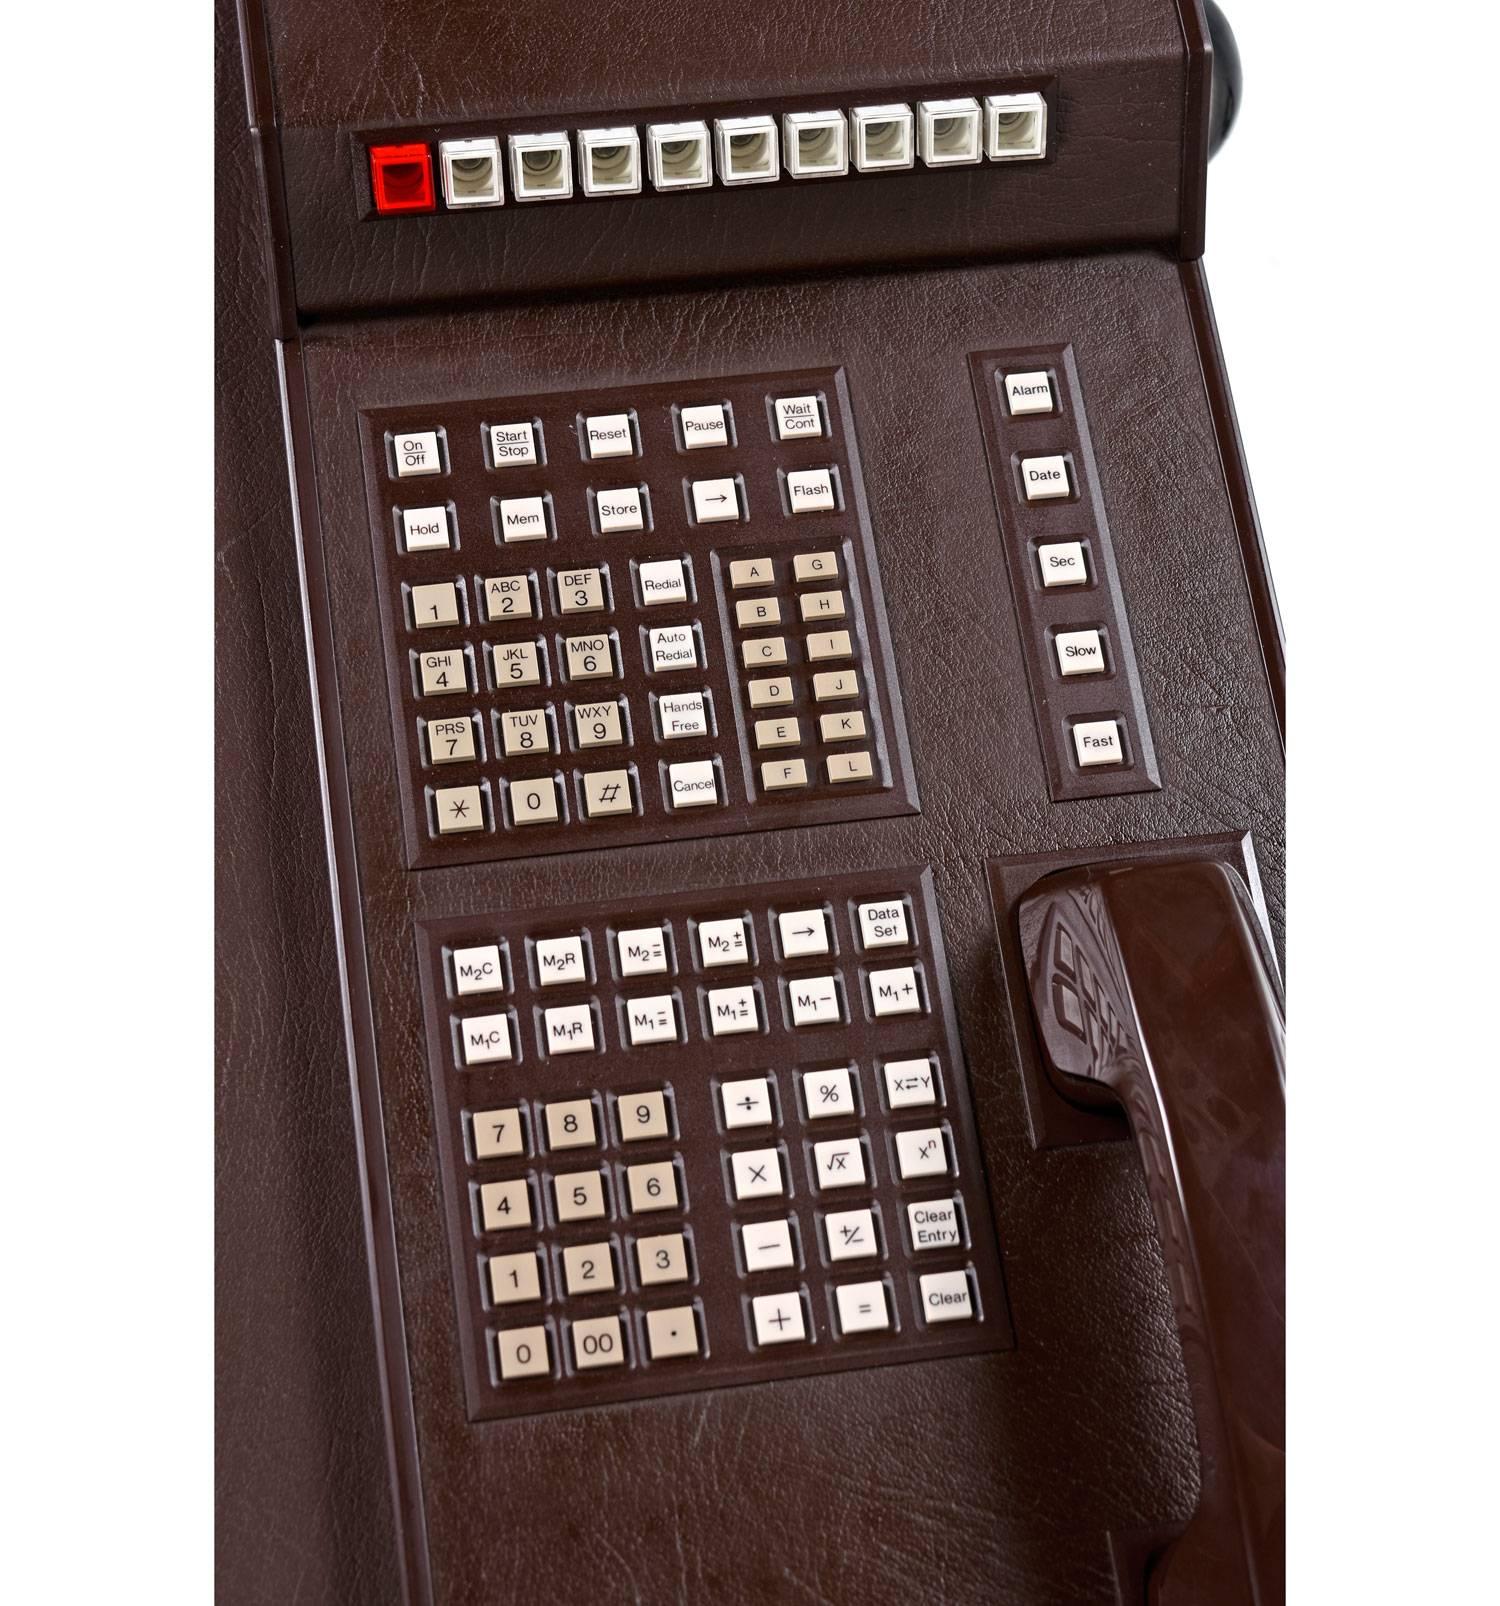 NOS Bynamics Leather Desk Director Phone System Six Hundred, 1985 2